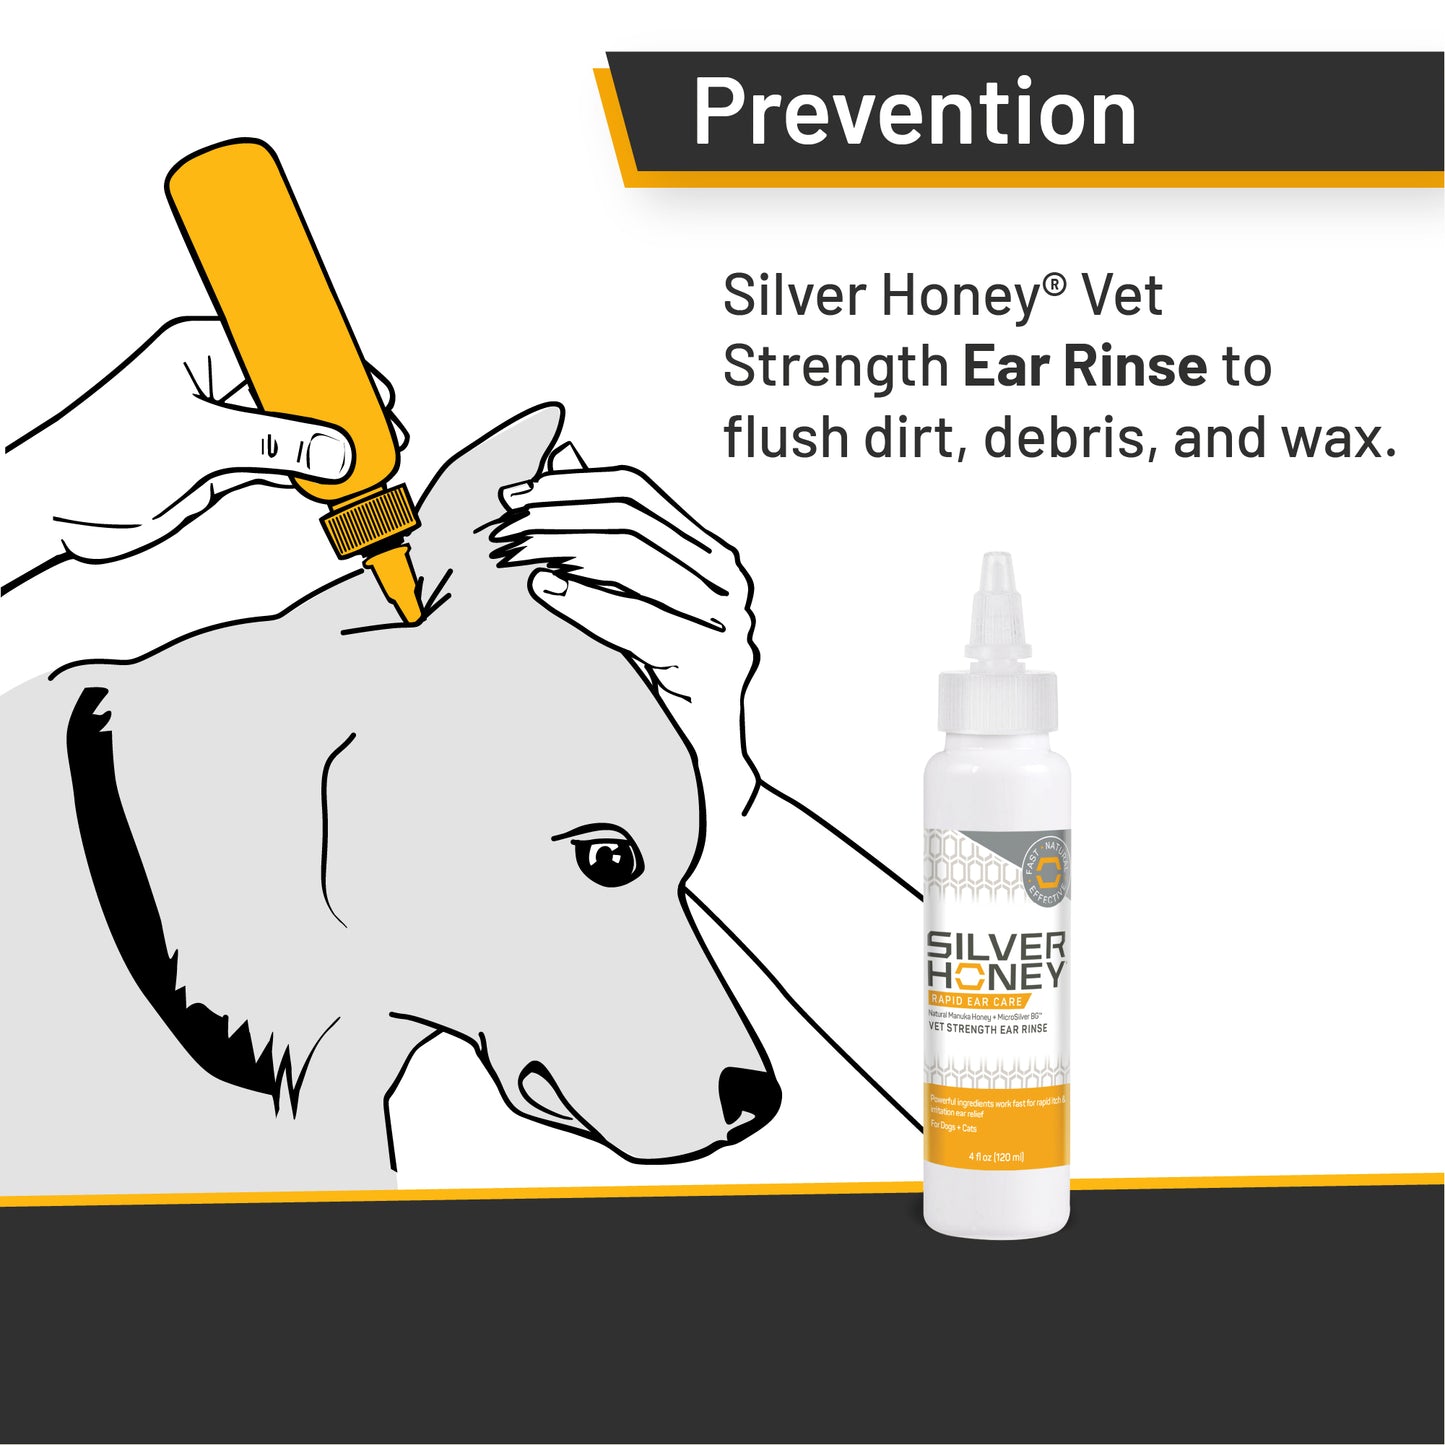 Silver Honey Rapid Ear Care rinse.  Prevention, Silver Honey Vet Strength Ear Rinse to flush dirt, debris and wax.